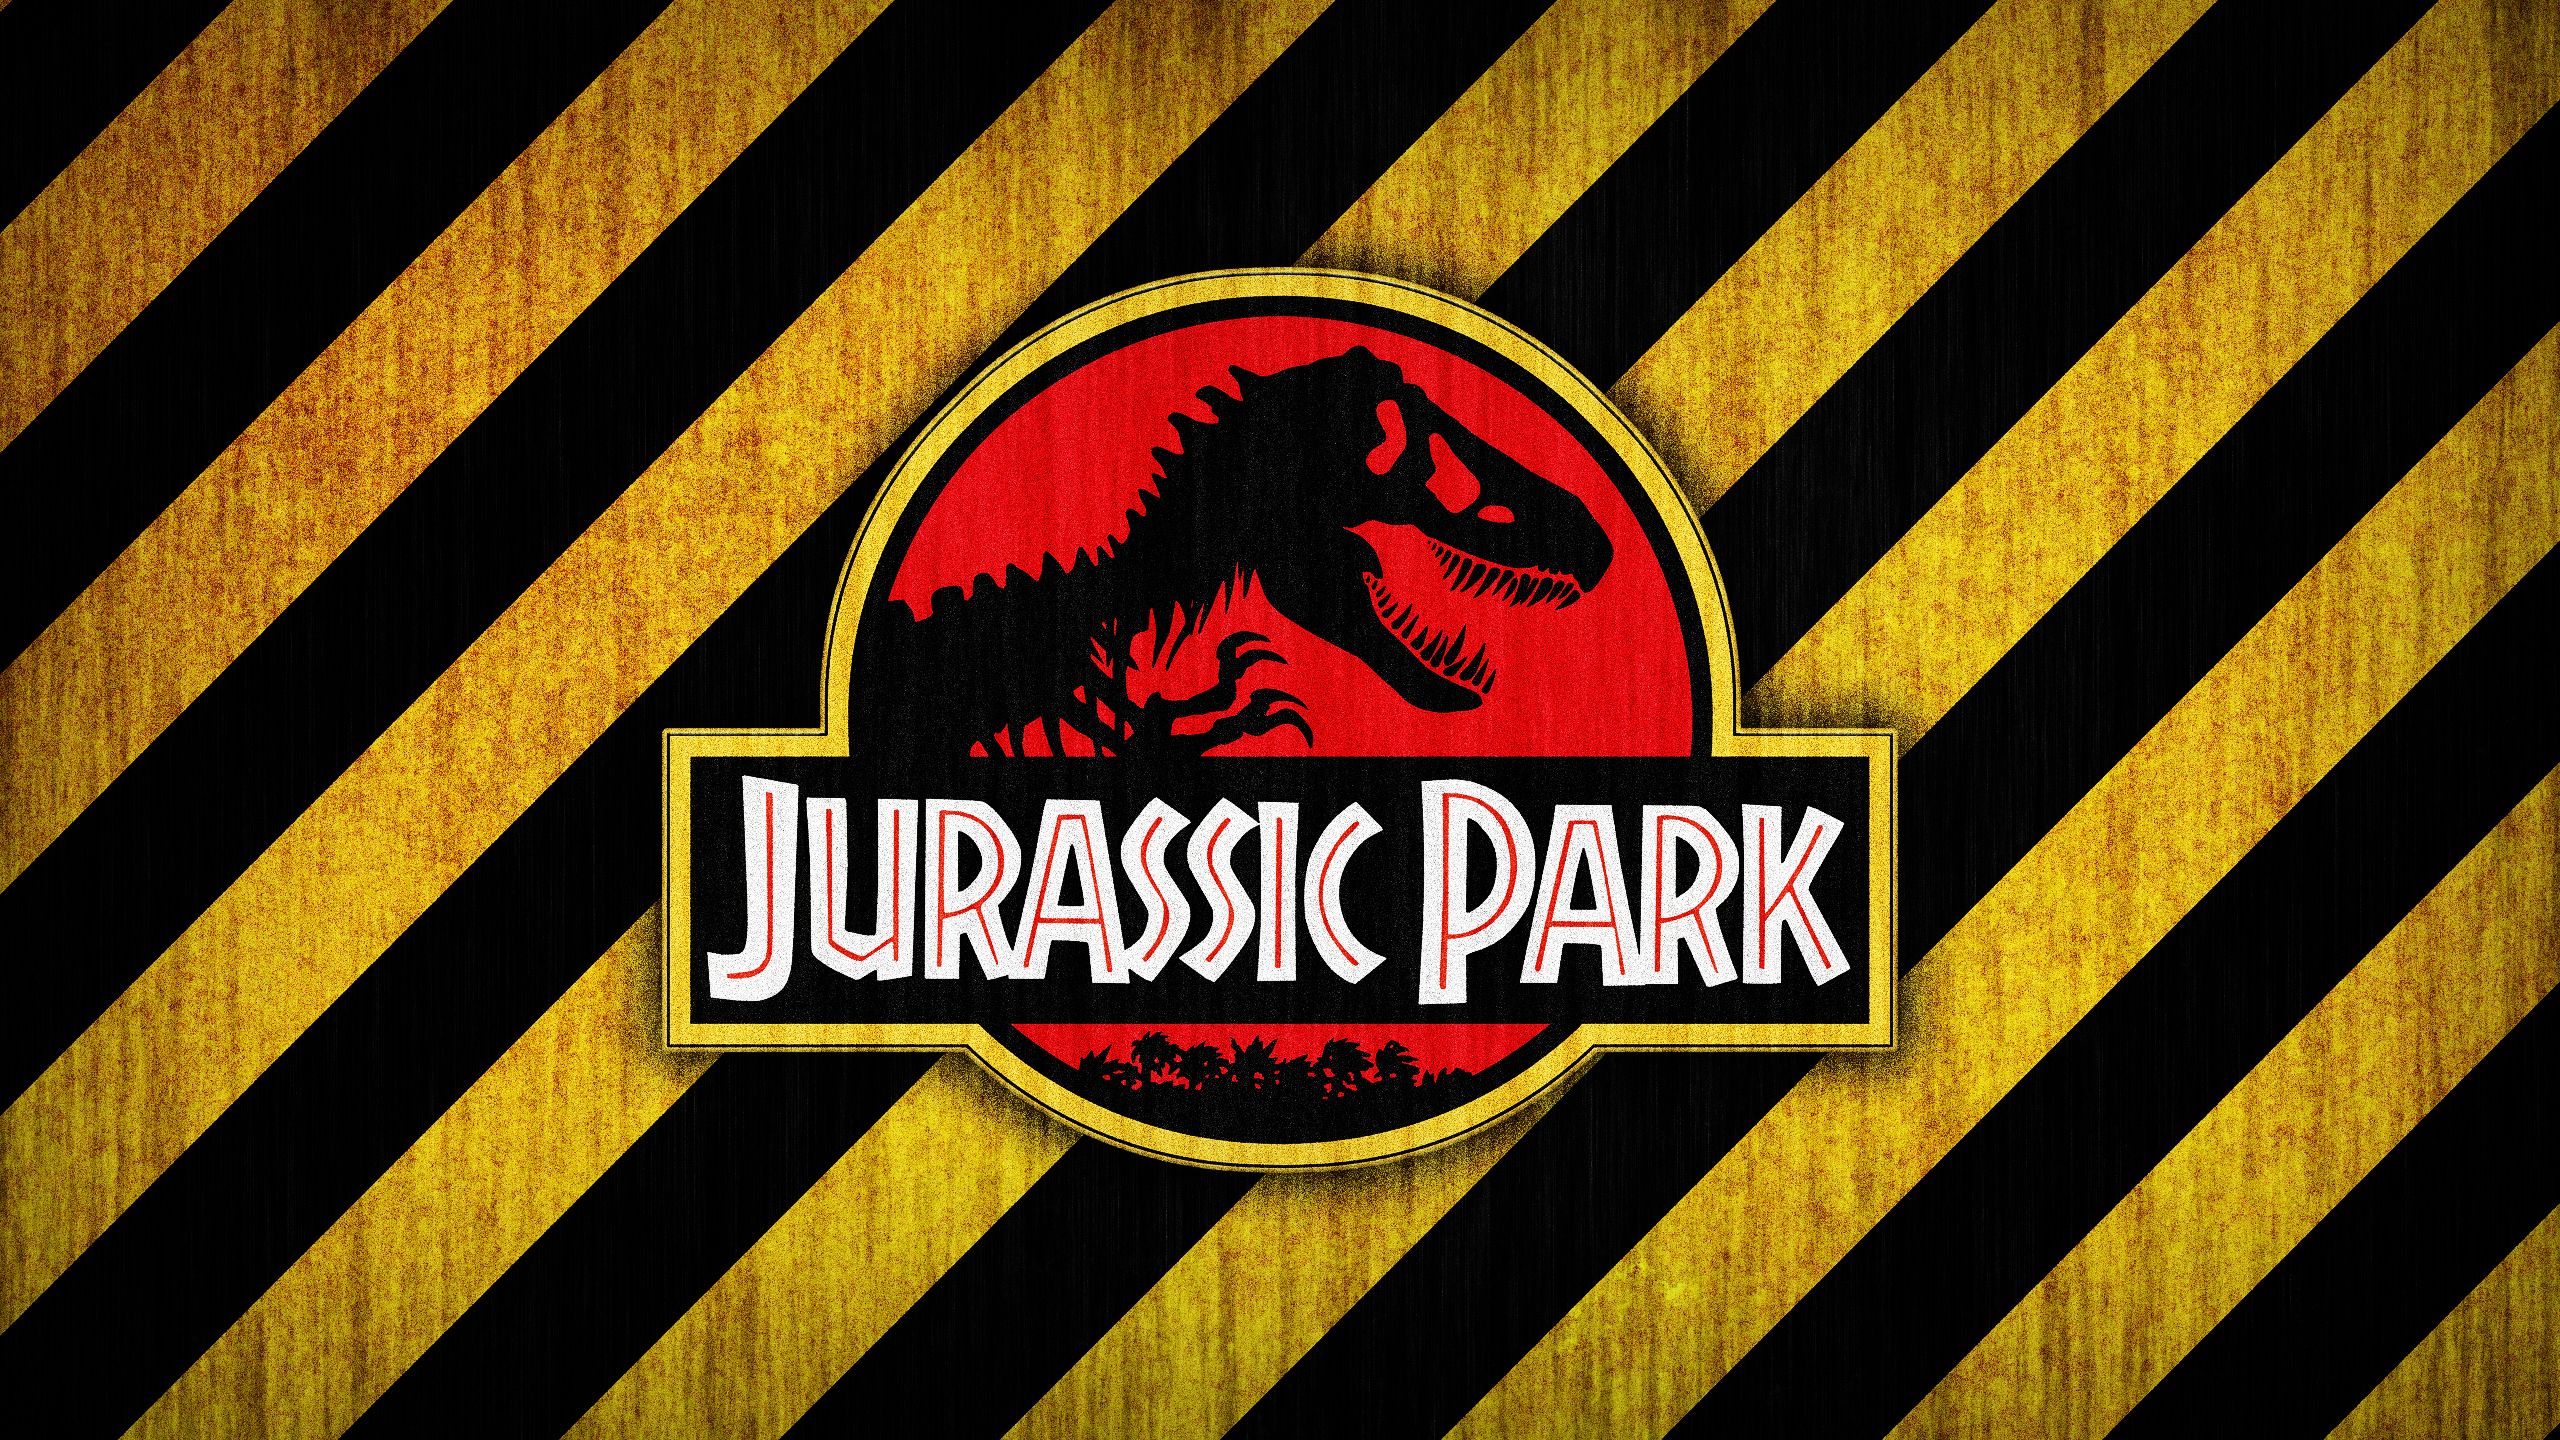 Jurassic Park Wallpaper, Picture, Image